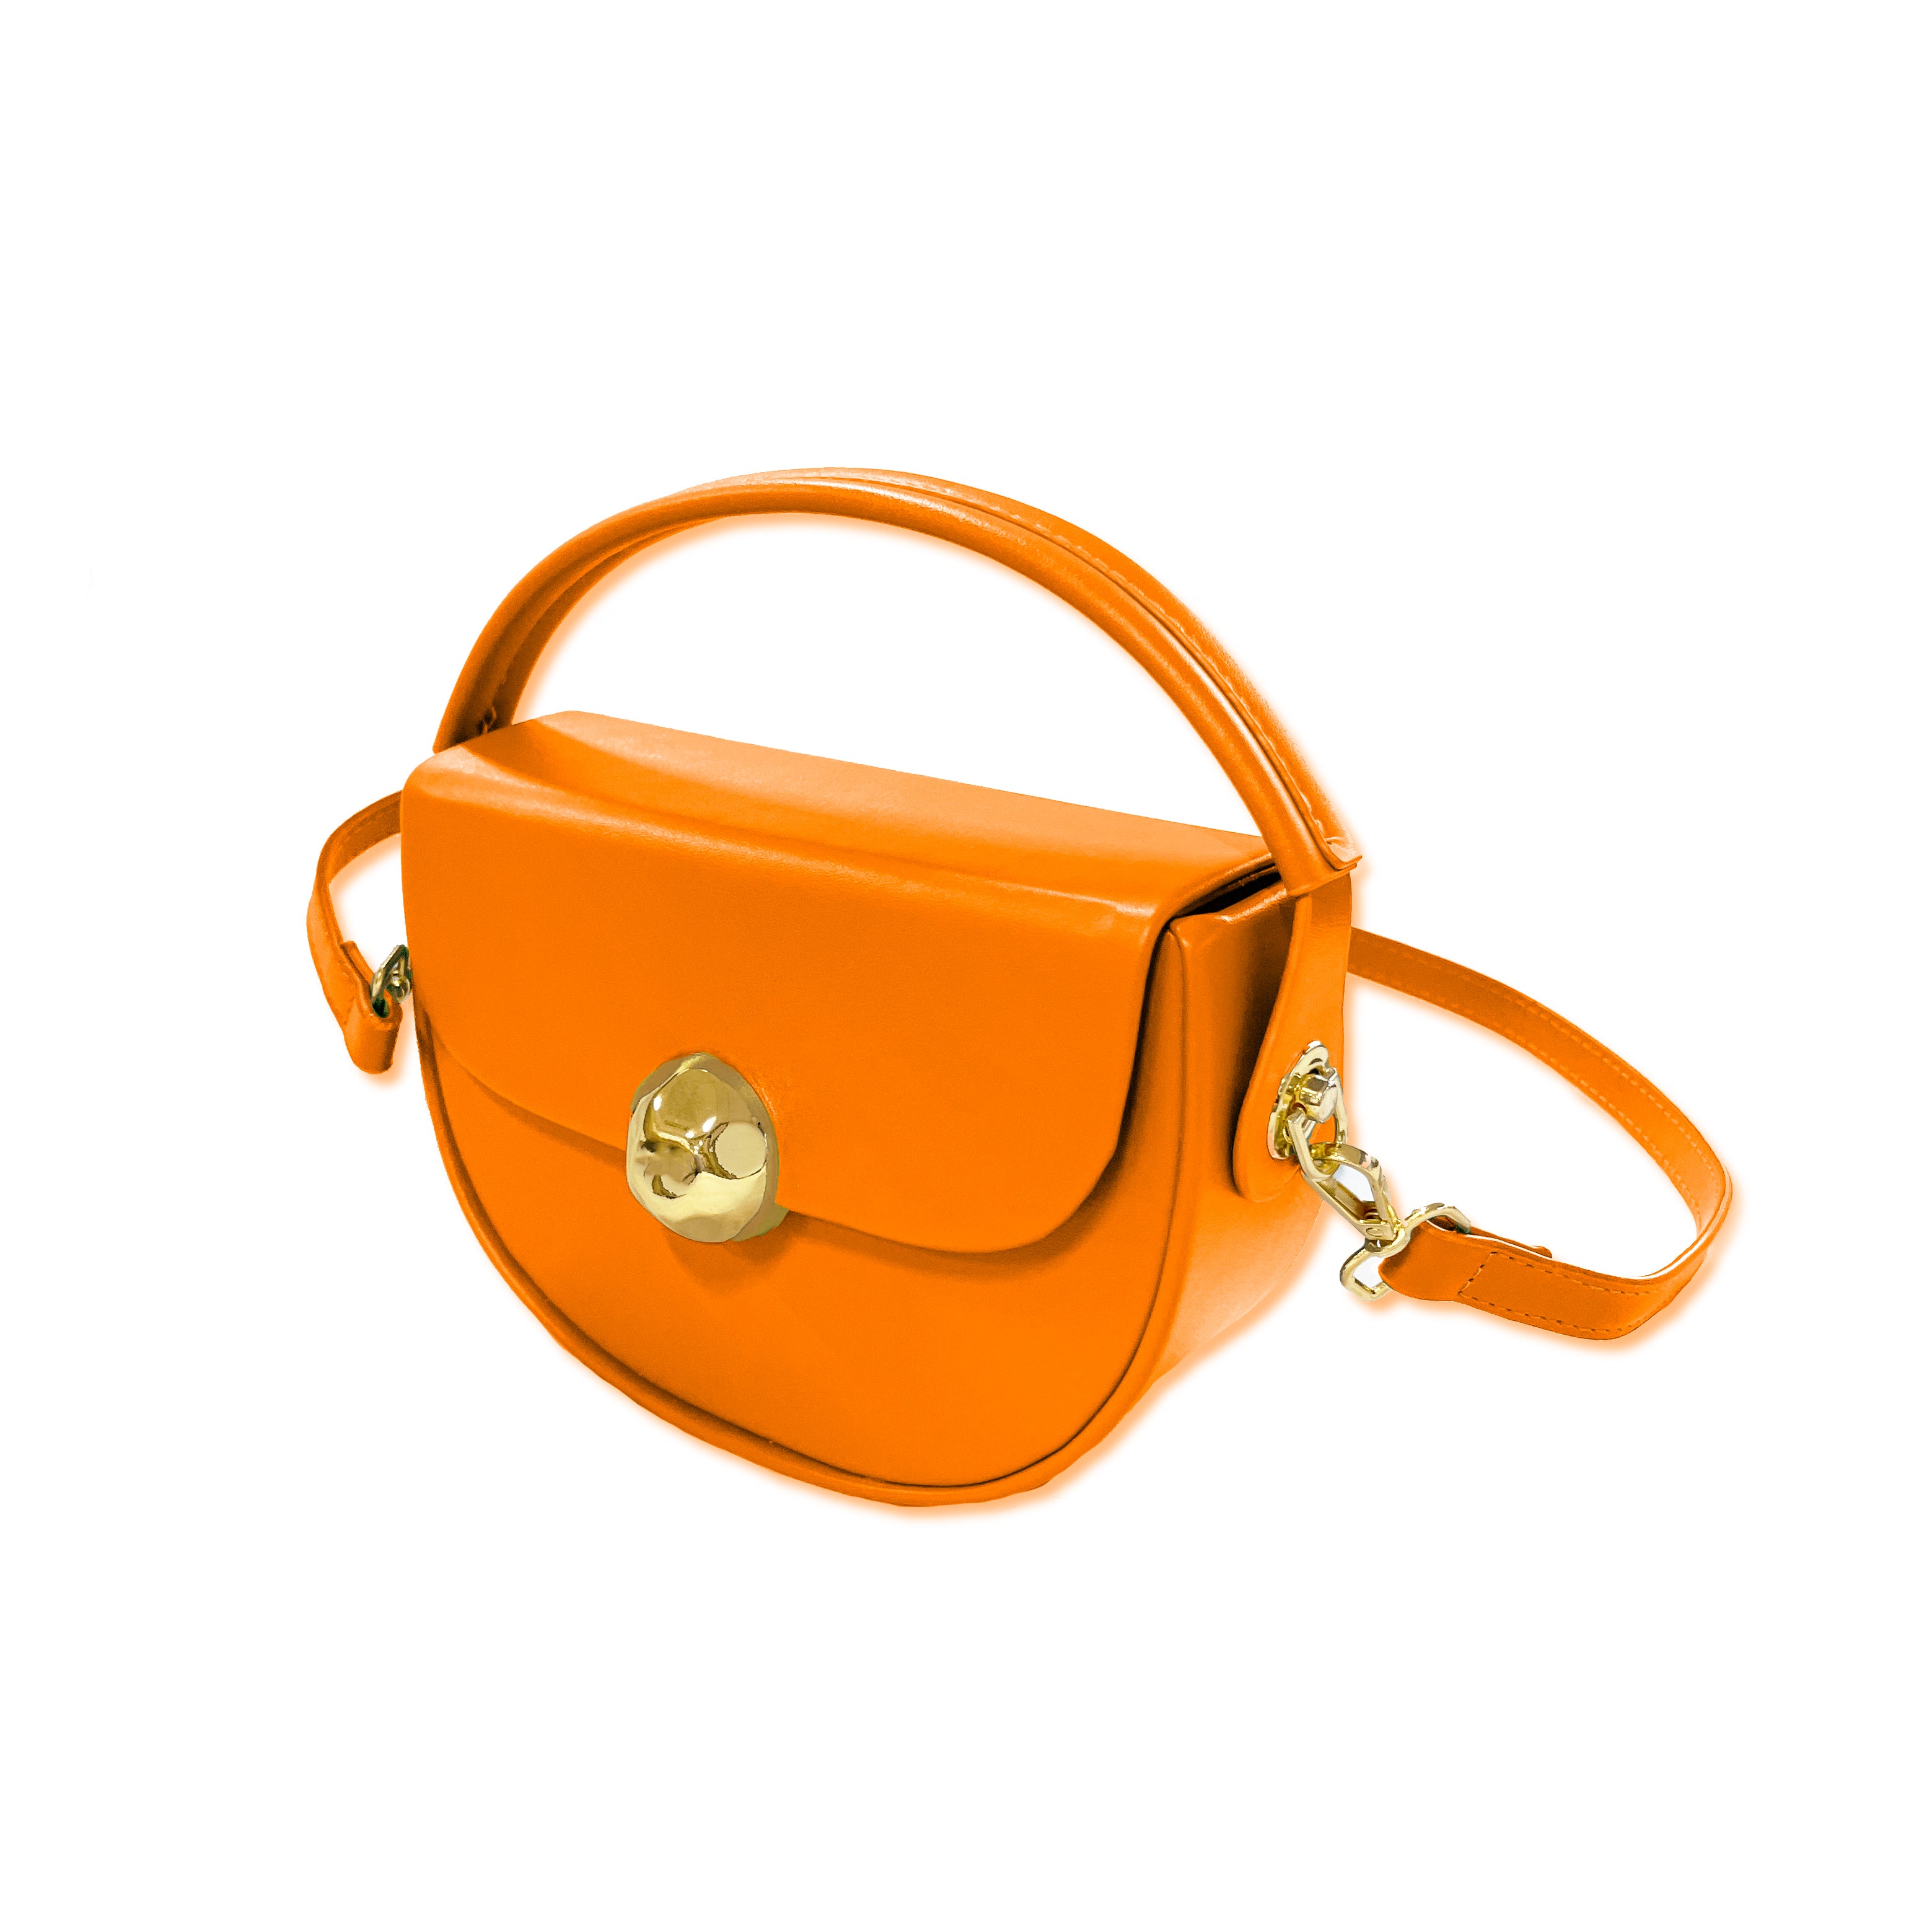 Caprilite Women's Top Handle Half Moon Box Clutch Handbag Chain Strap Gold Button Crossbody Wedding Evening Bag - Orange